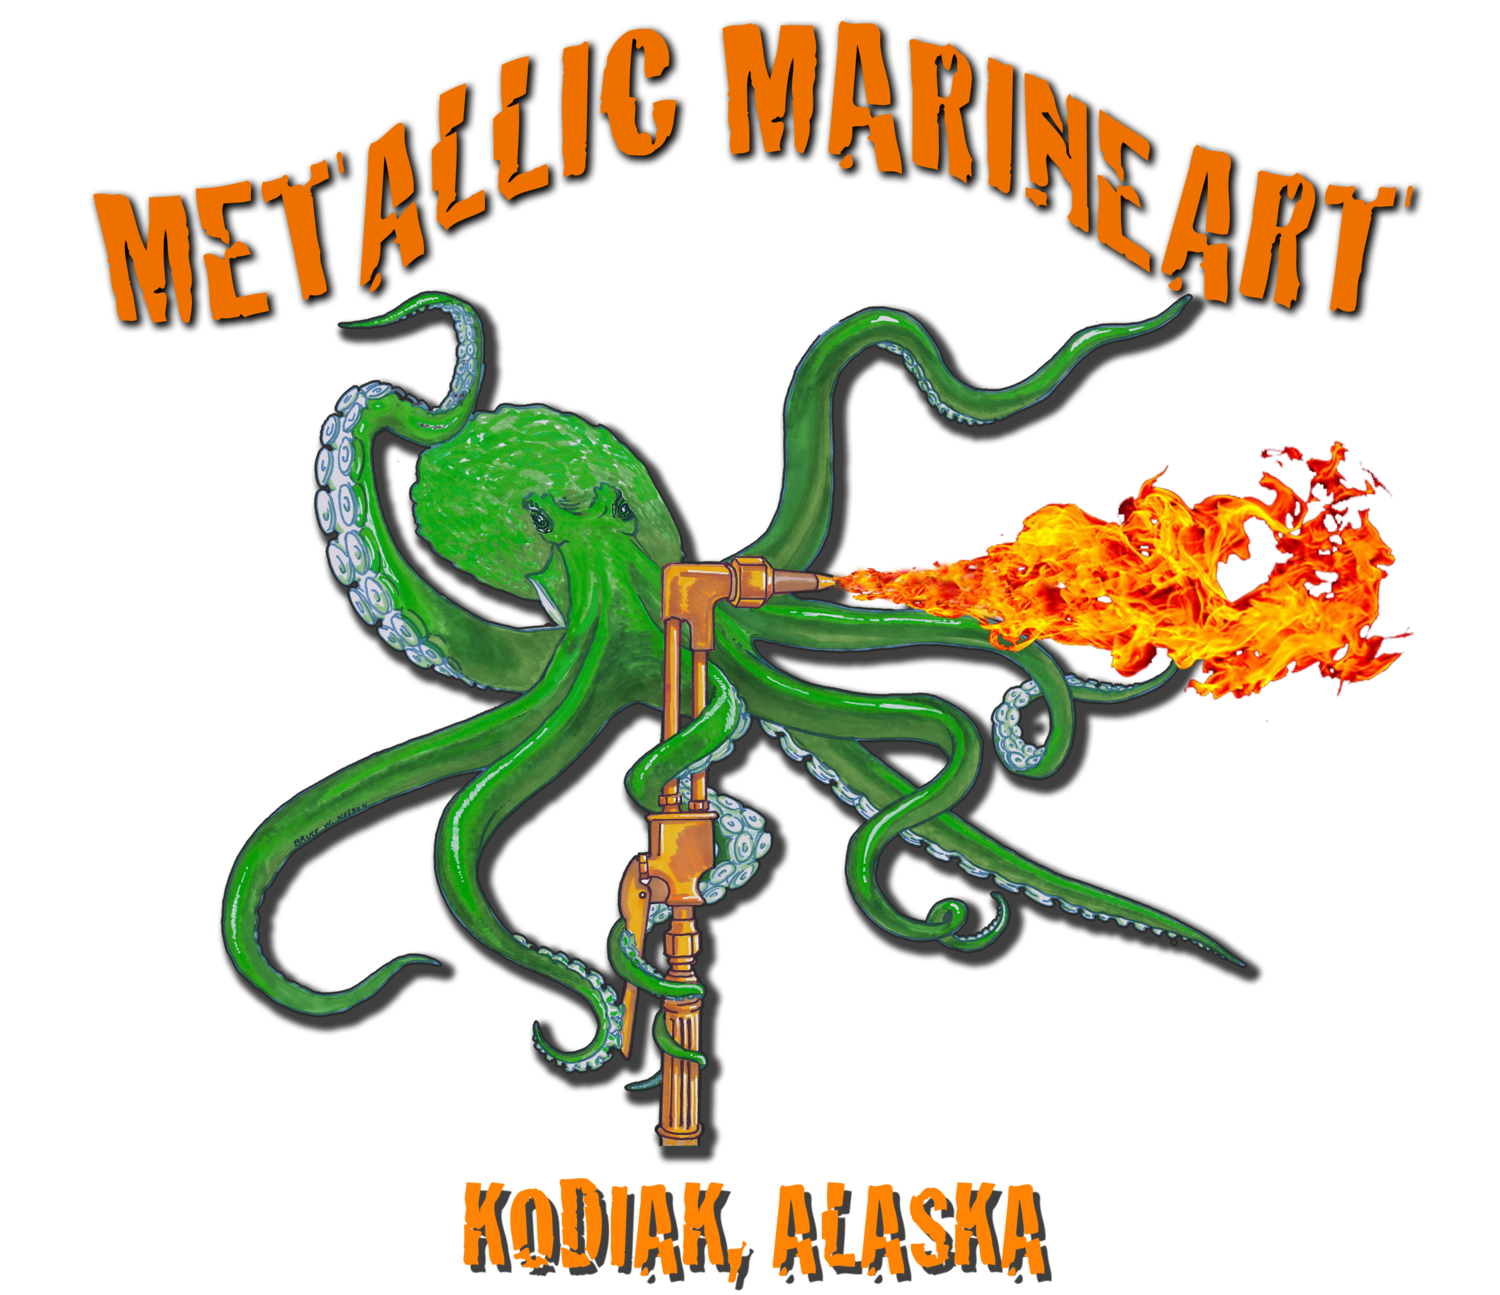 Metallic Marine Art